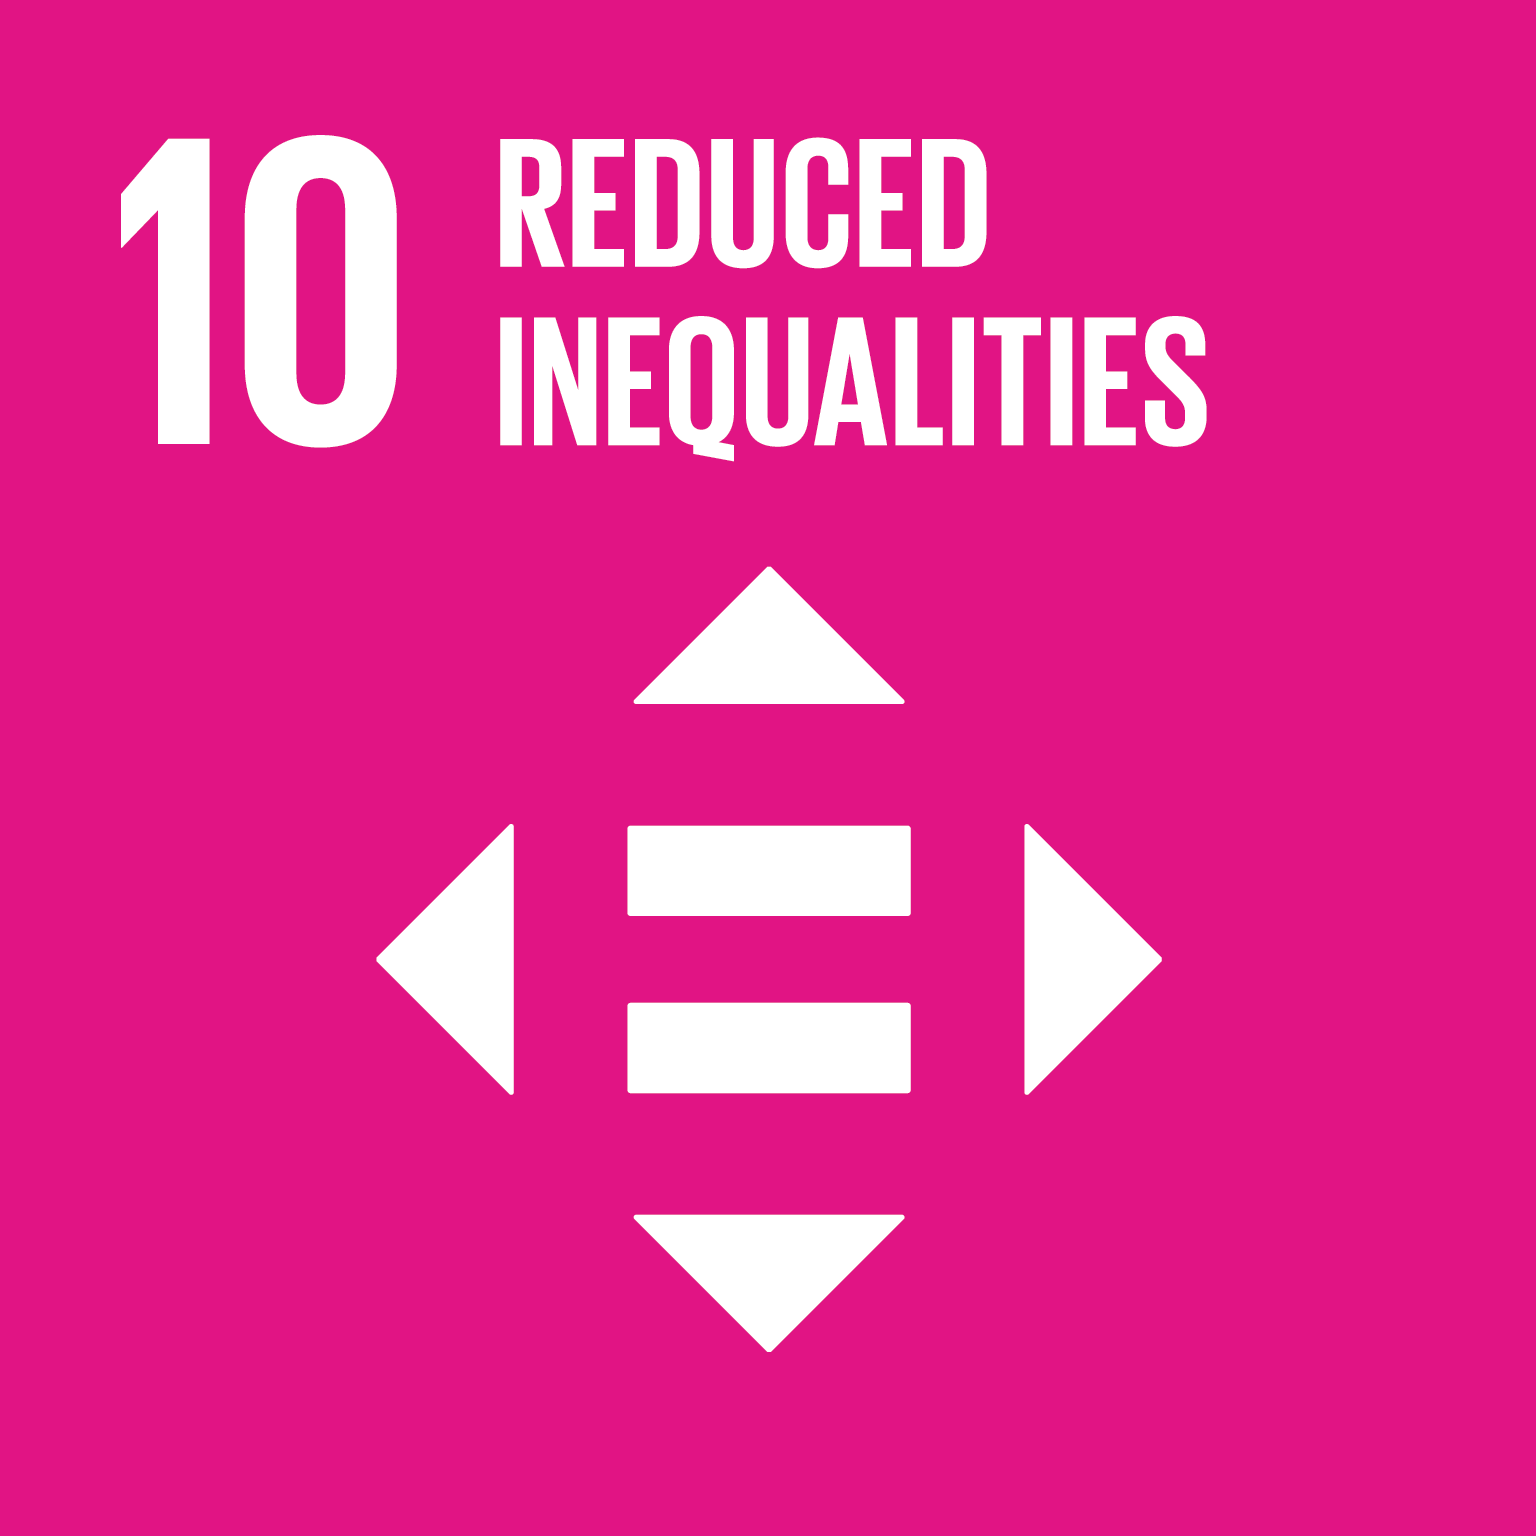 SDG - 10: Reduced inequalities